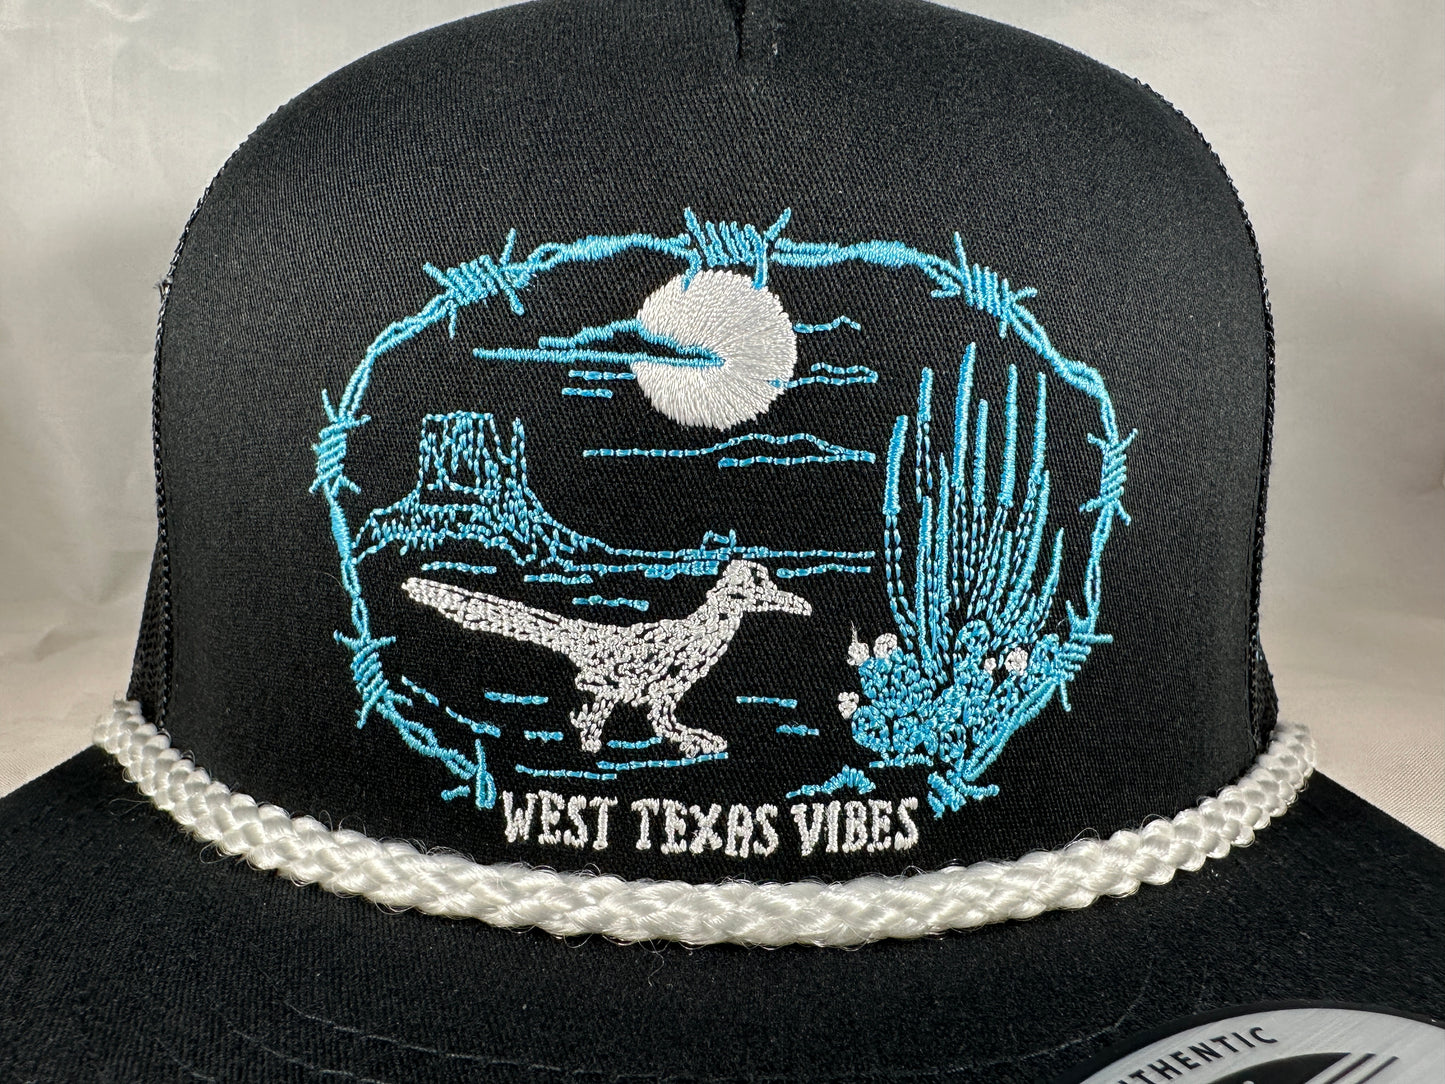 West Texas Vibes - Black/Black Mesh